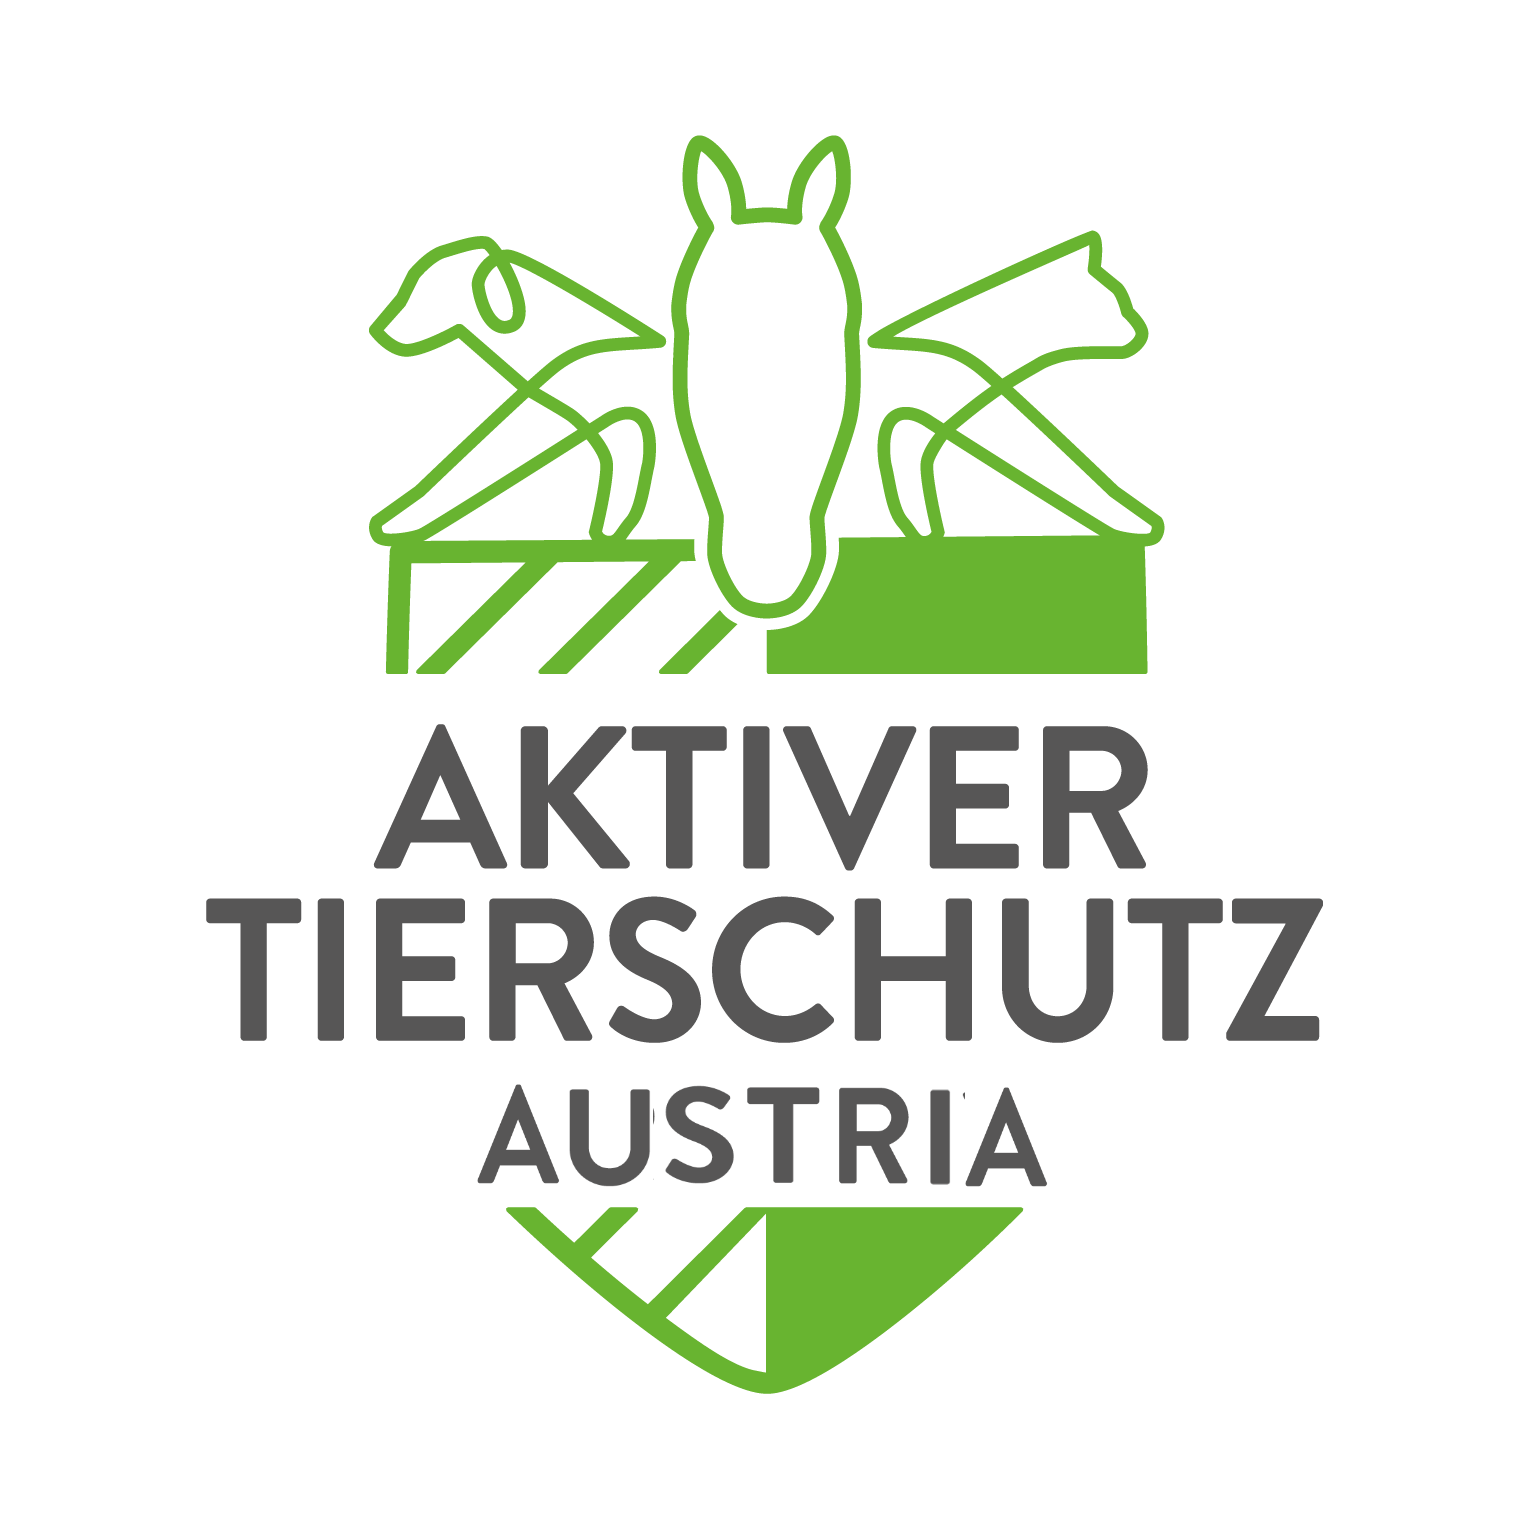 Aktiver Tierschutz Austria - Arche Noah in Graz